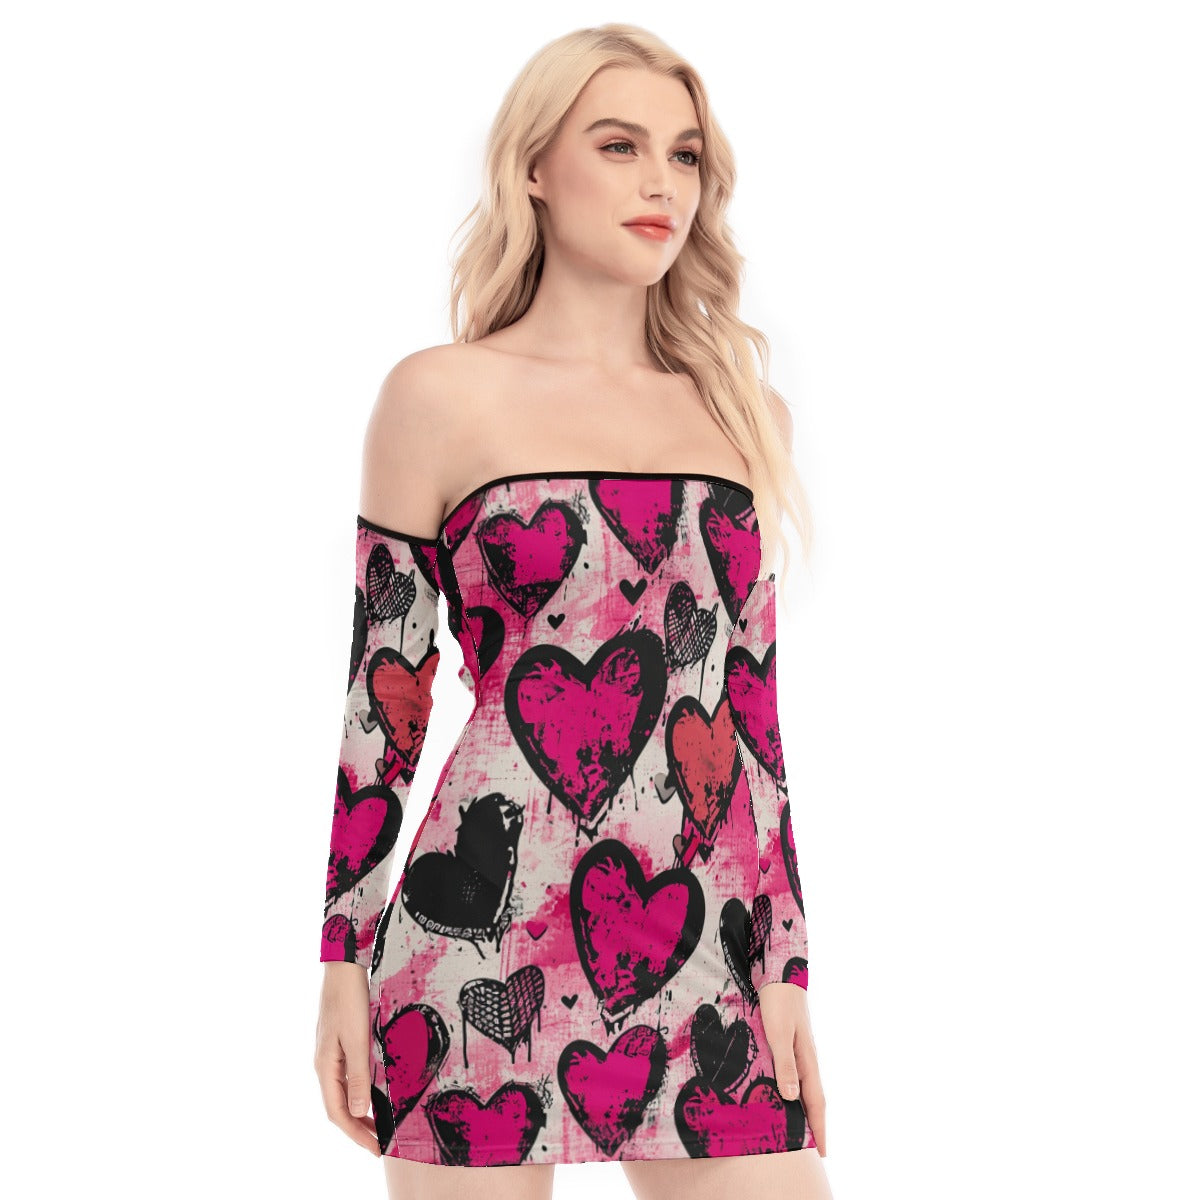 Gothic Hearts Off-shoulder Back Lace-up Dress